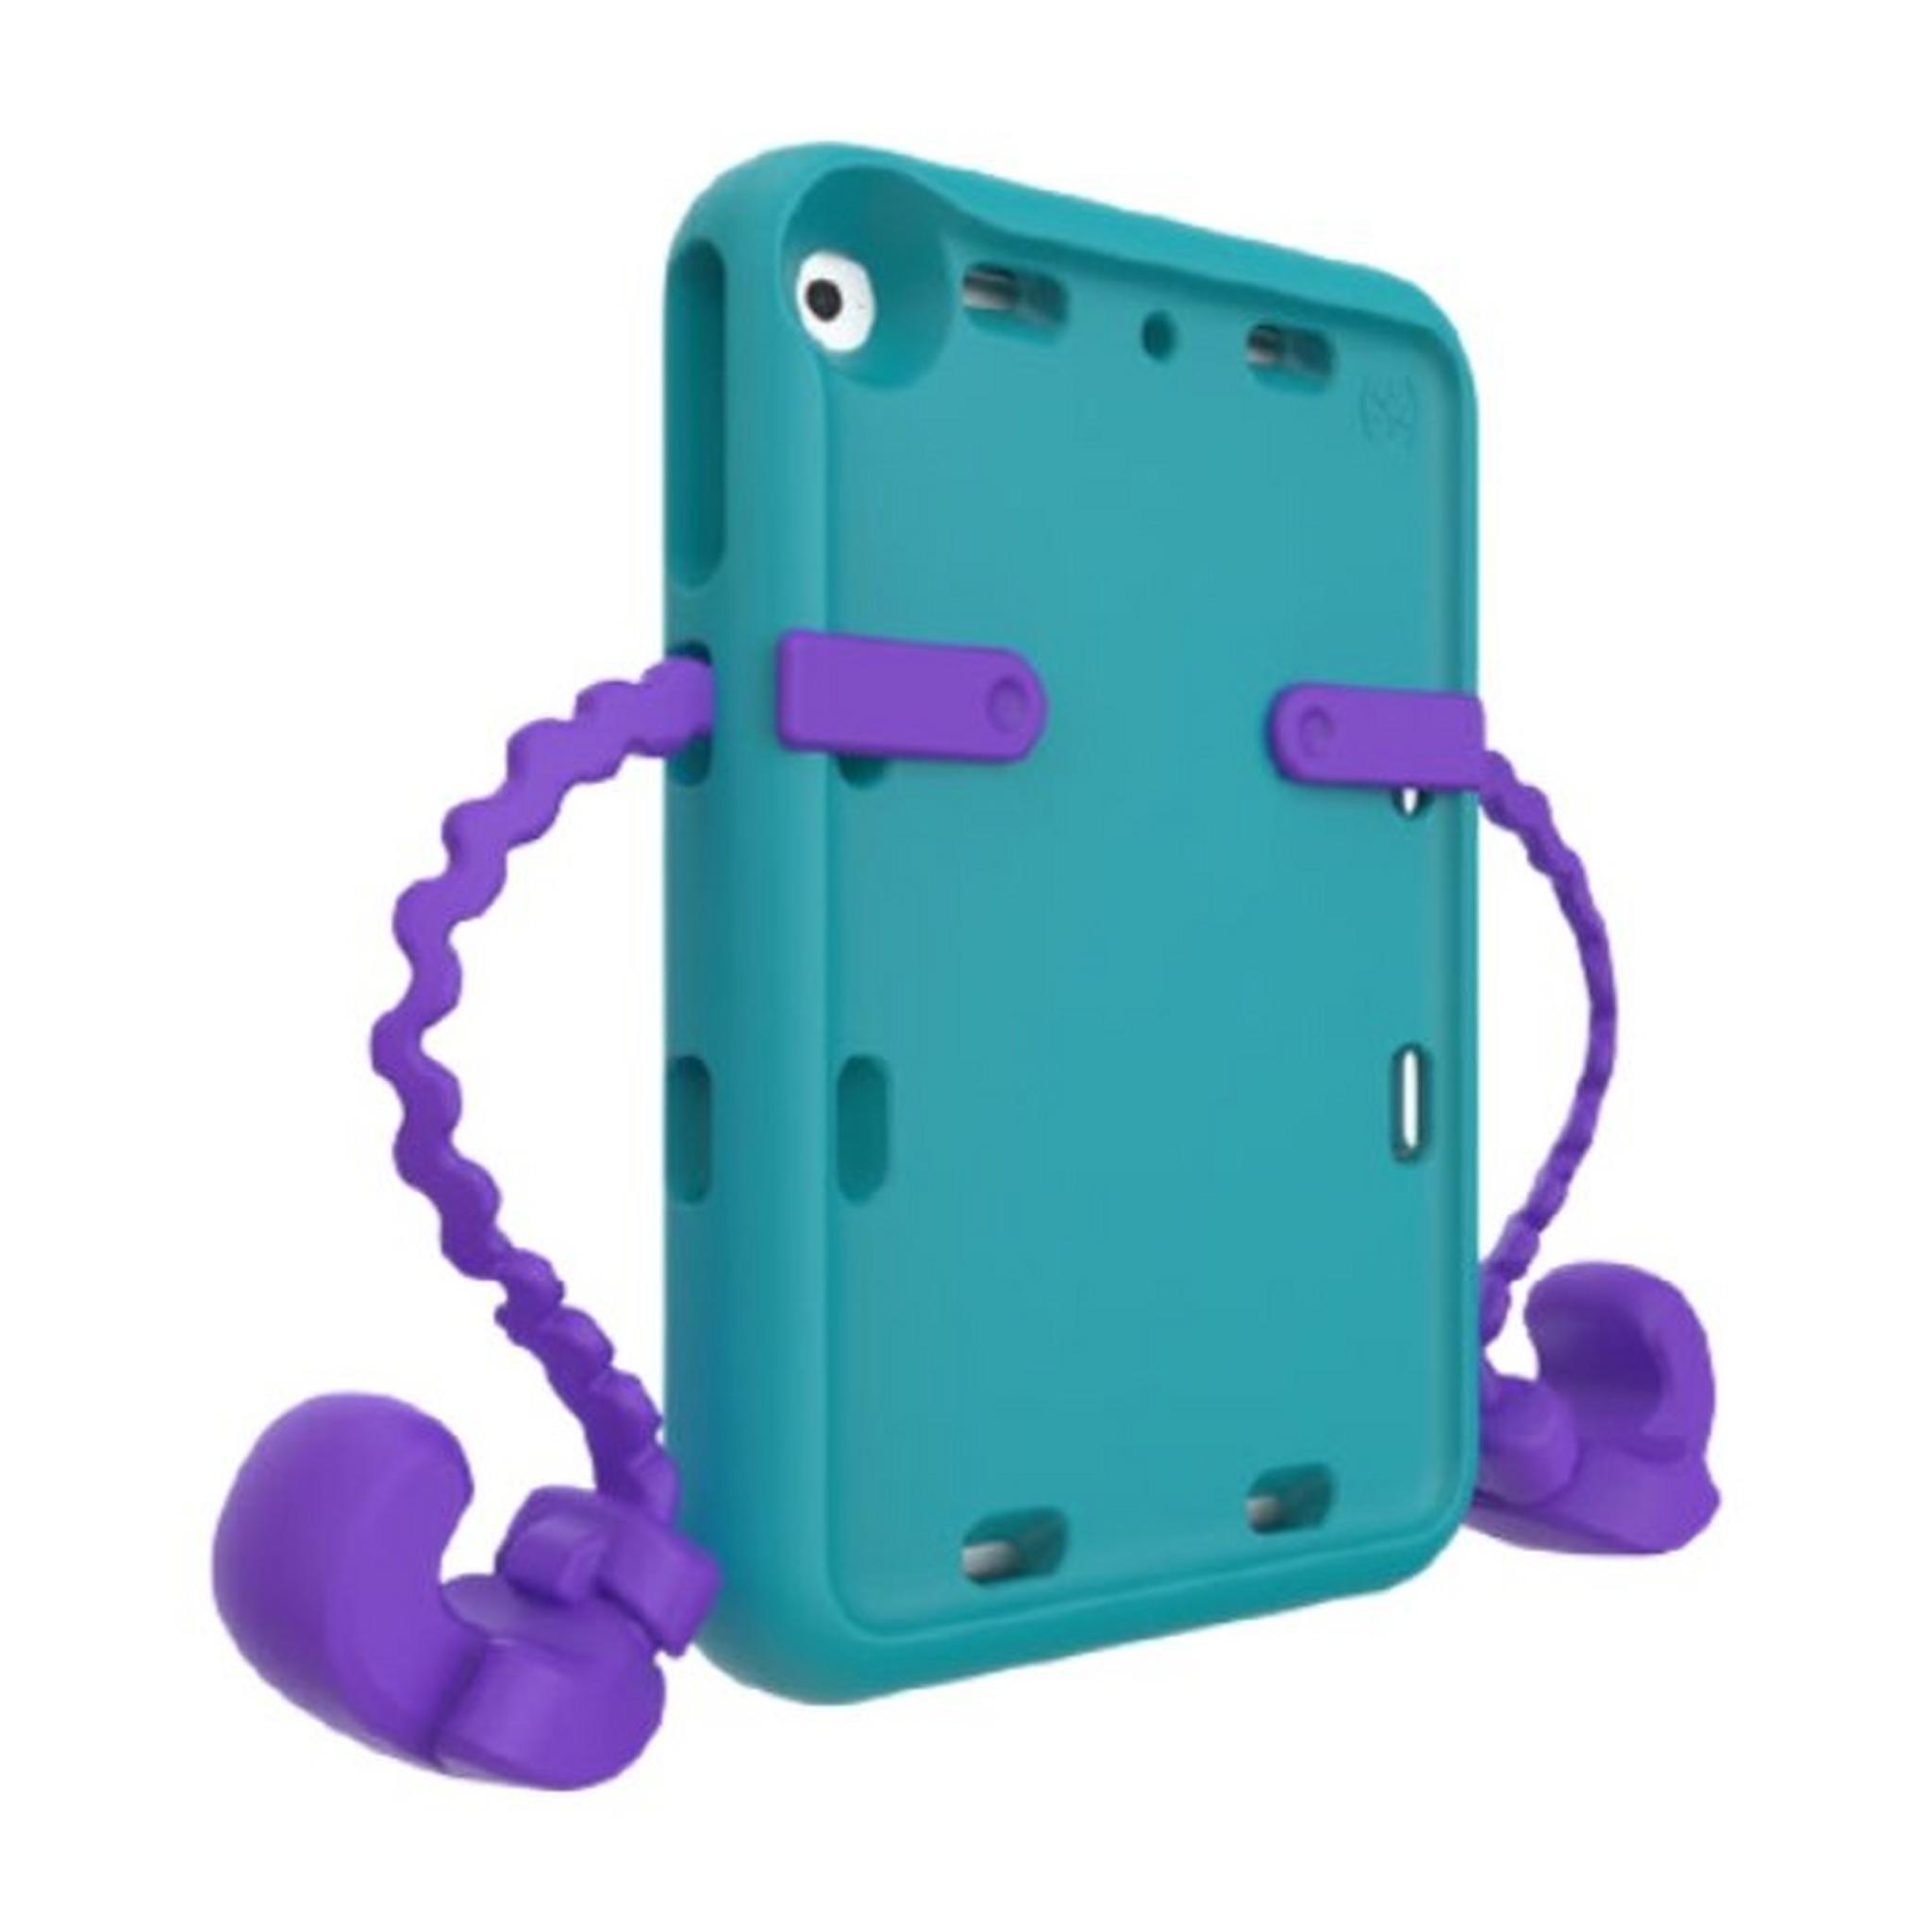 Speck Case-E iPad Mini (5th Gen.) Case - Aquamarine Teal / Purple